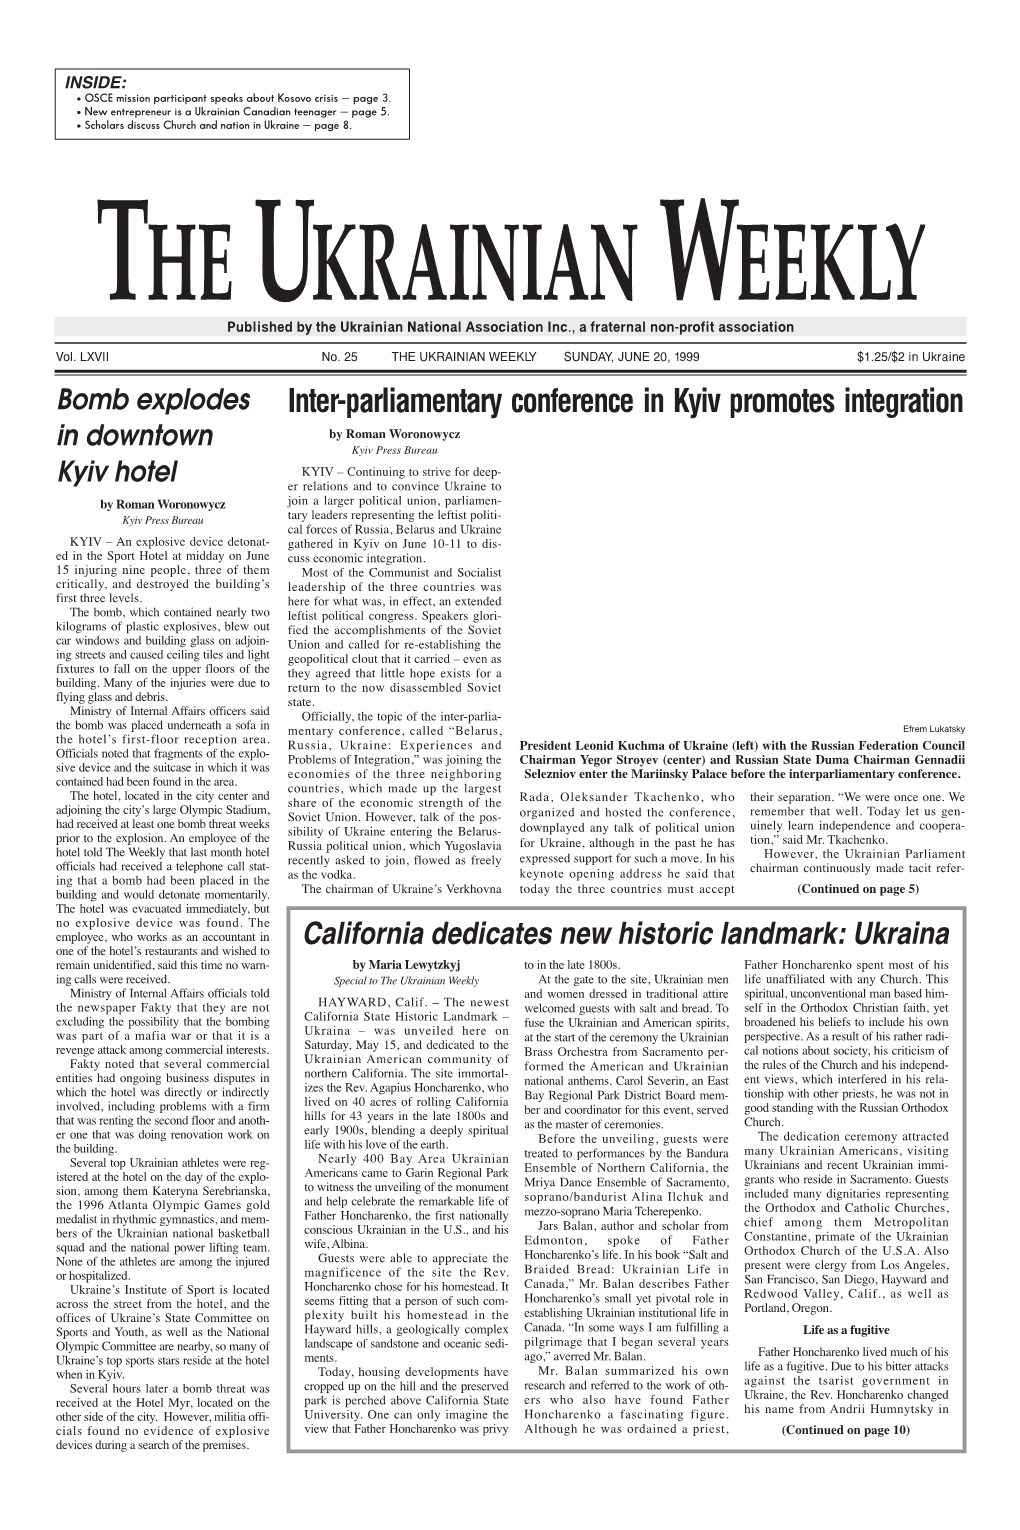 The Ukrainian Weekly 1999, No.25